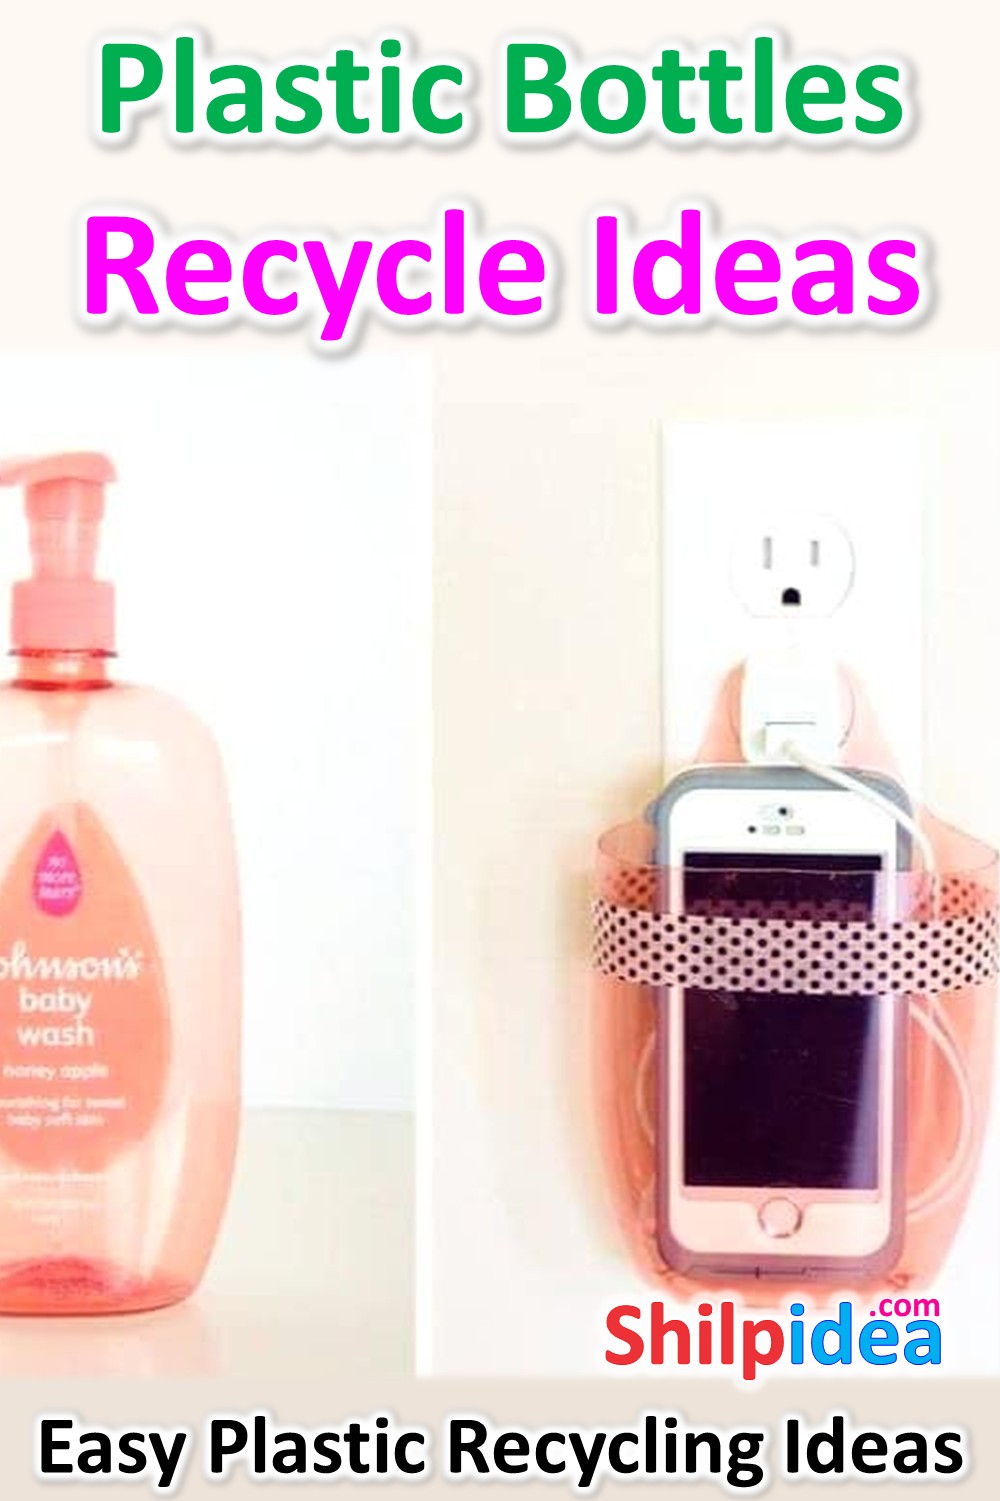 plastic-bottle-recycle-ideas-shilpidea-pin